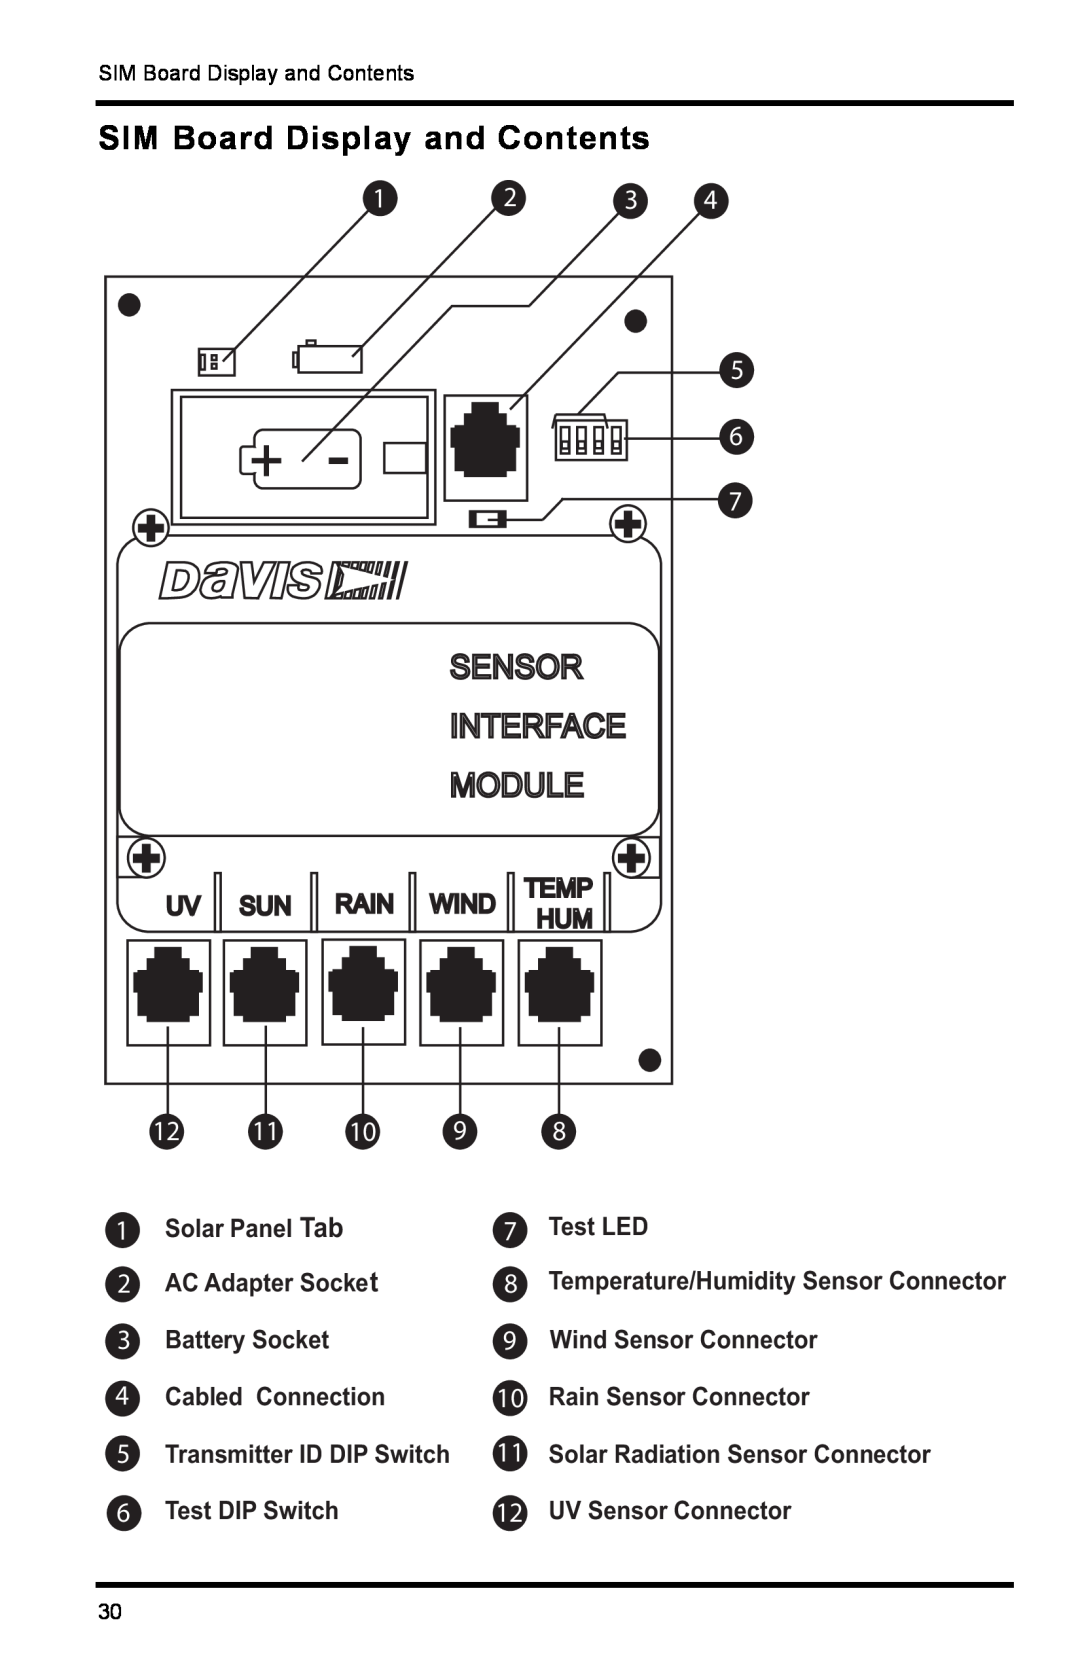 DAVIS 6322C installation manual SIM Board Display and Contents, Sensor, Interface, Module, 4 5 